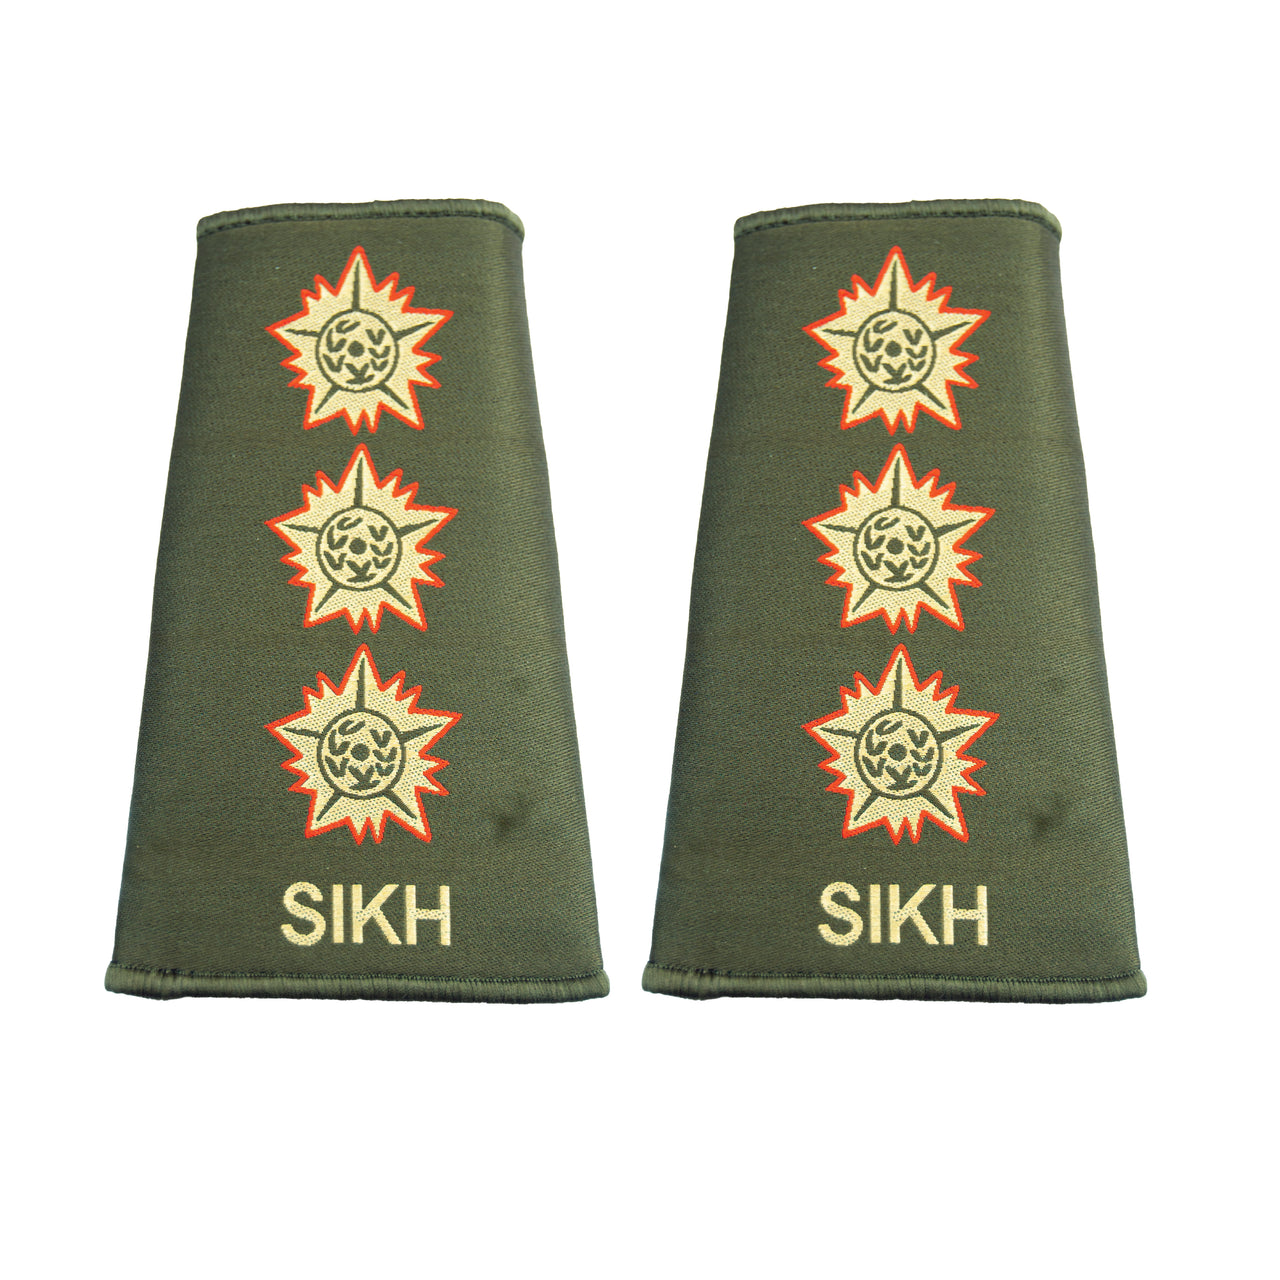 Indian Army Rank Epaulettes - Sikh Regiment